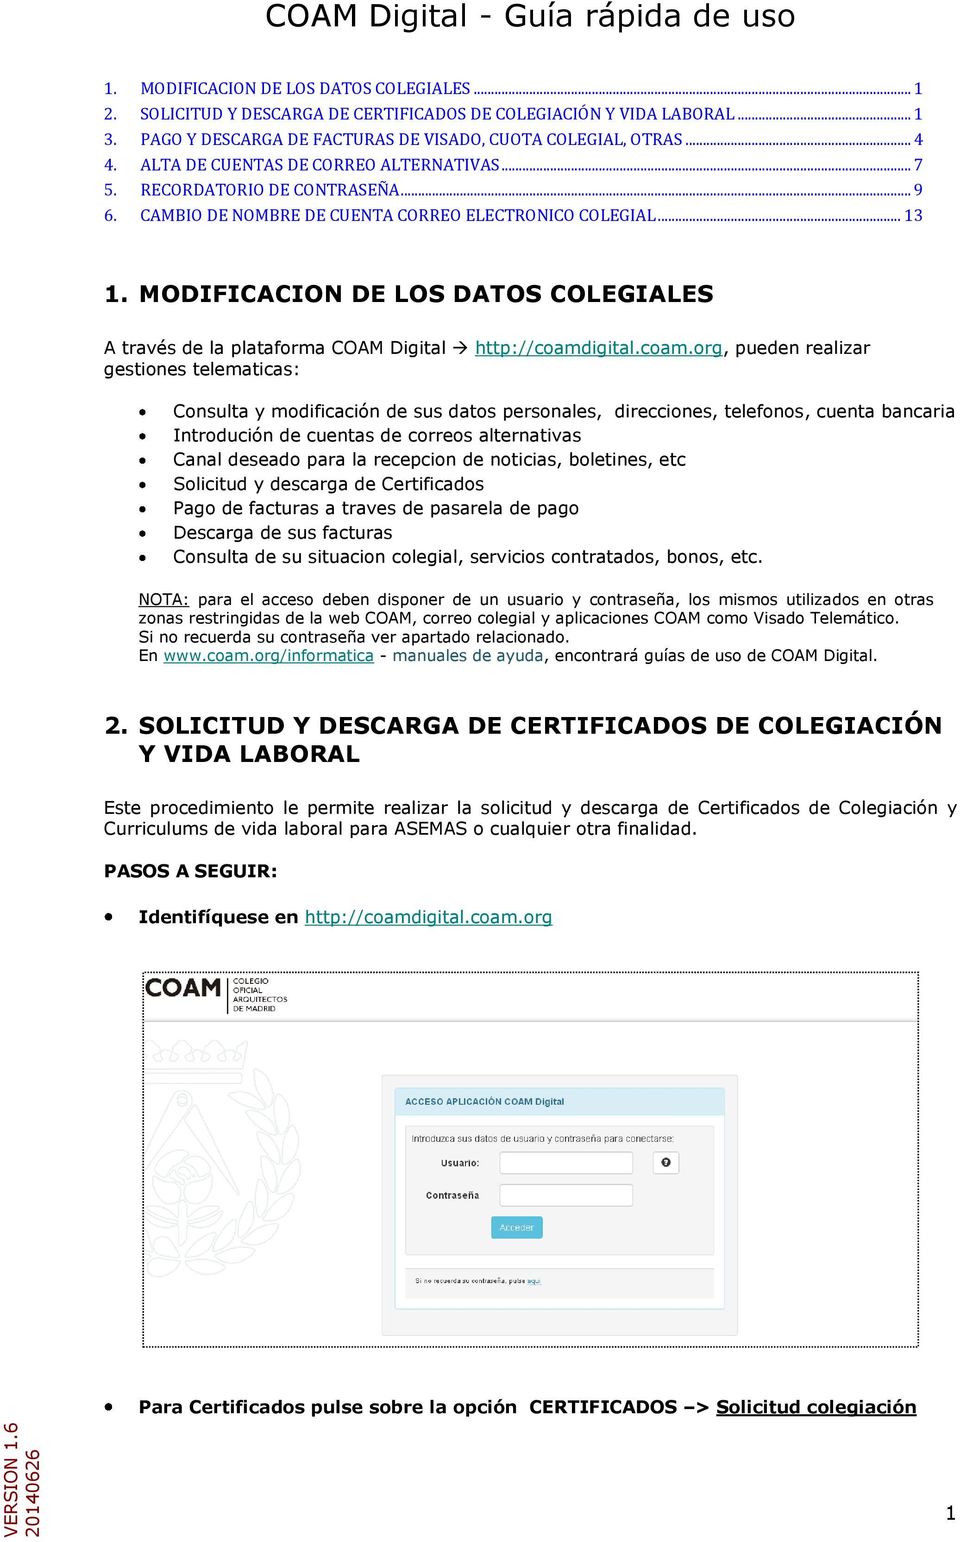 MODIFICACION DE LOS DATOS COLEGIALES A través de la plataforma COAM Digital http://coamd